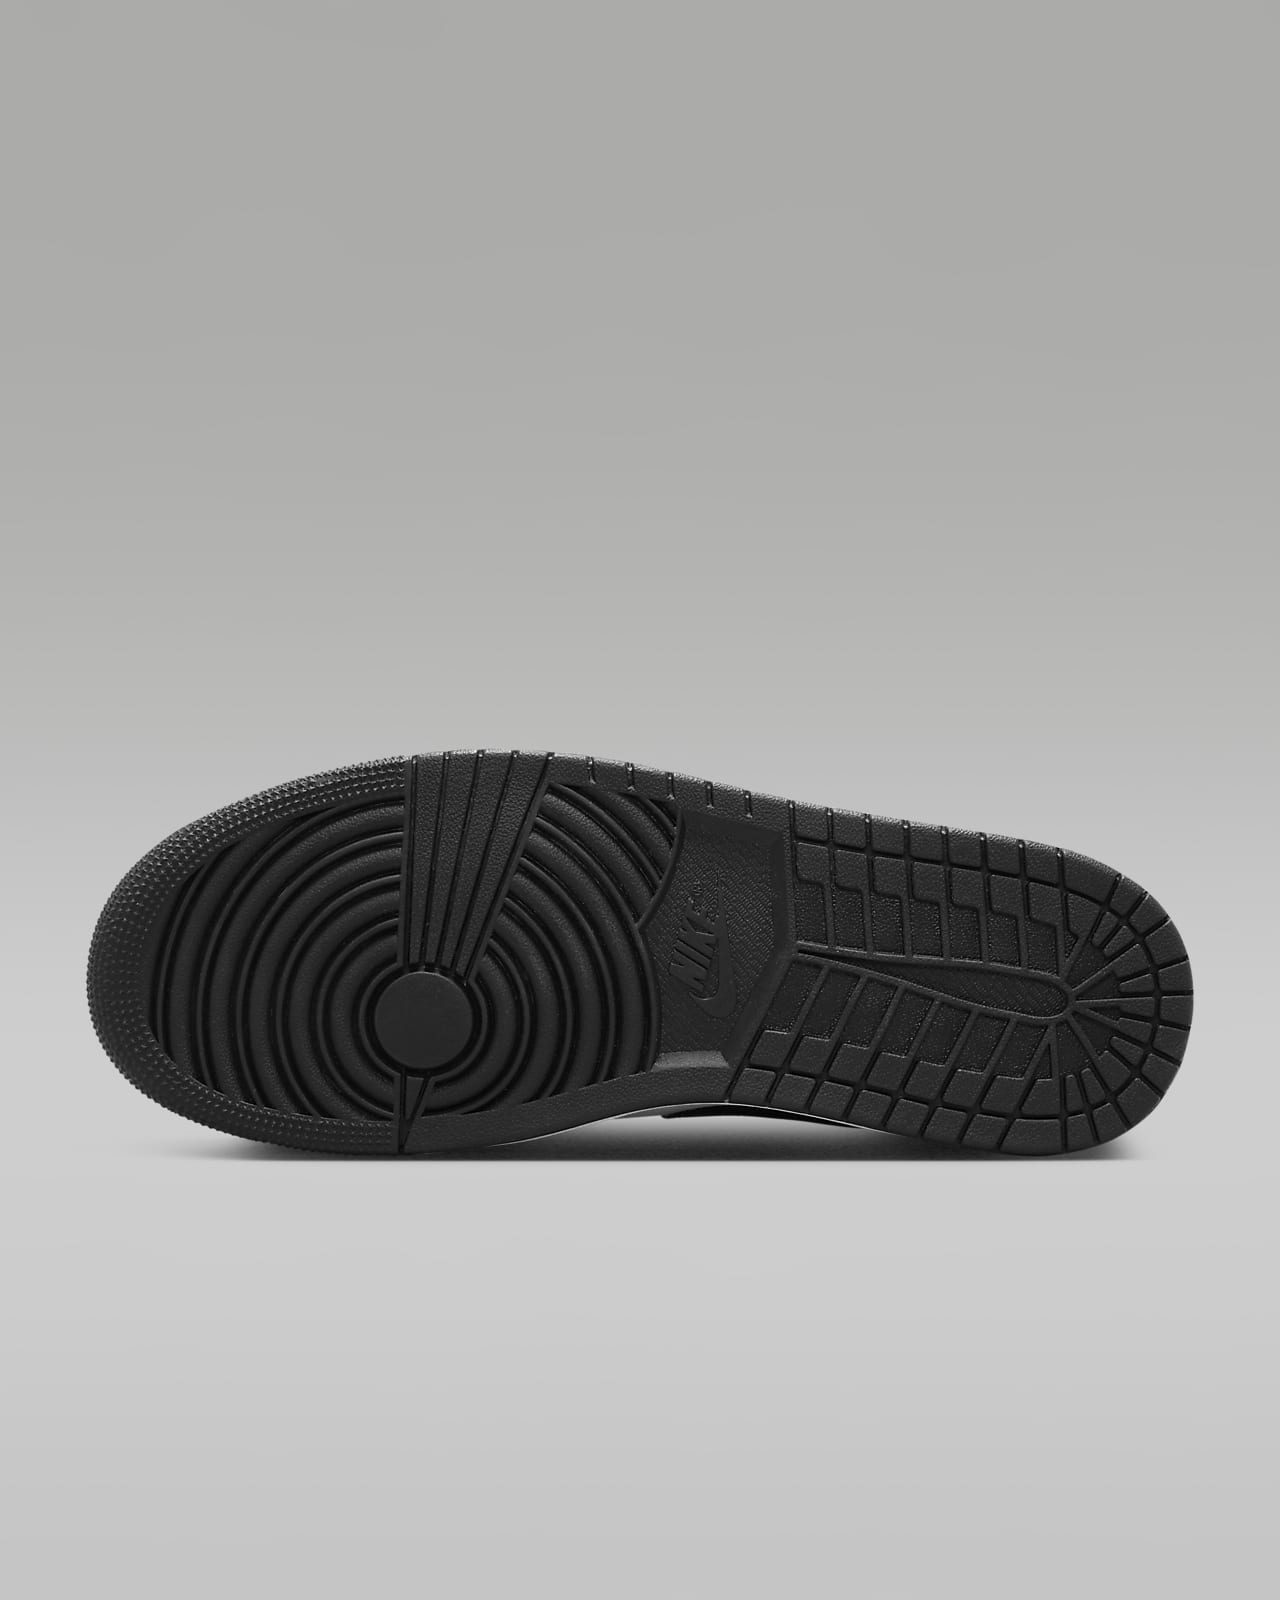 Air Jordan 1 Mid 'Black and Metallic Silver' Release Date. Nike SNKRS ID